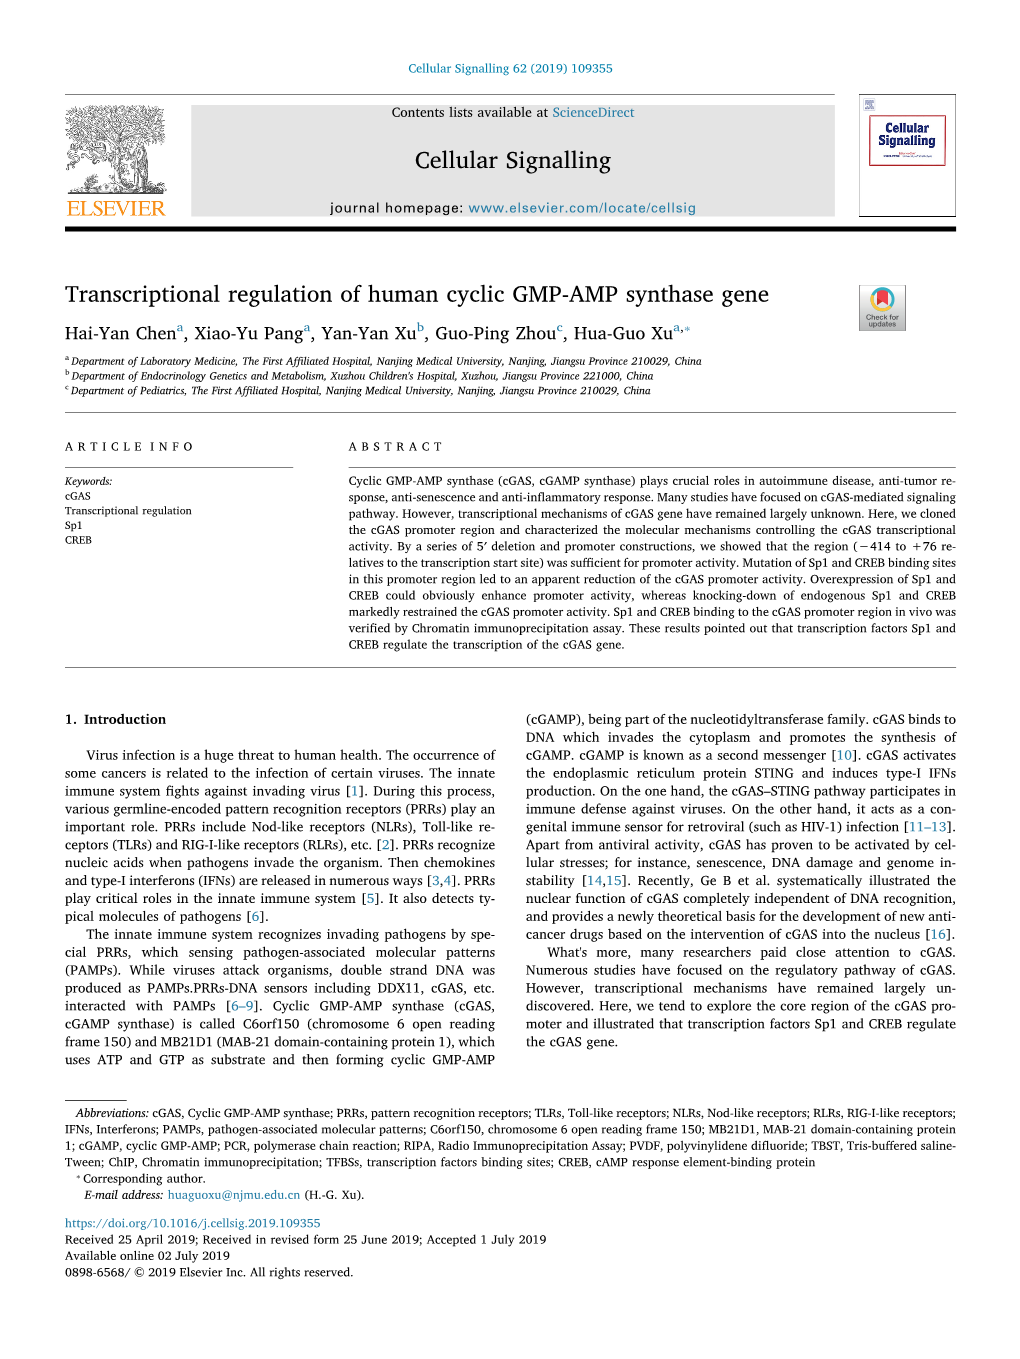 Transcriptional Regulation of Human Cyclic GMP-AMP Synthase Gene